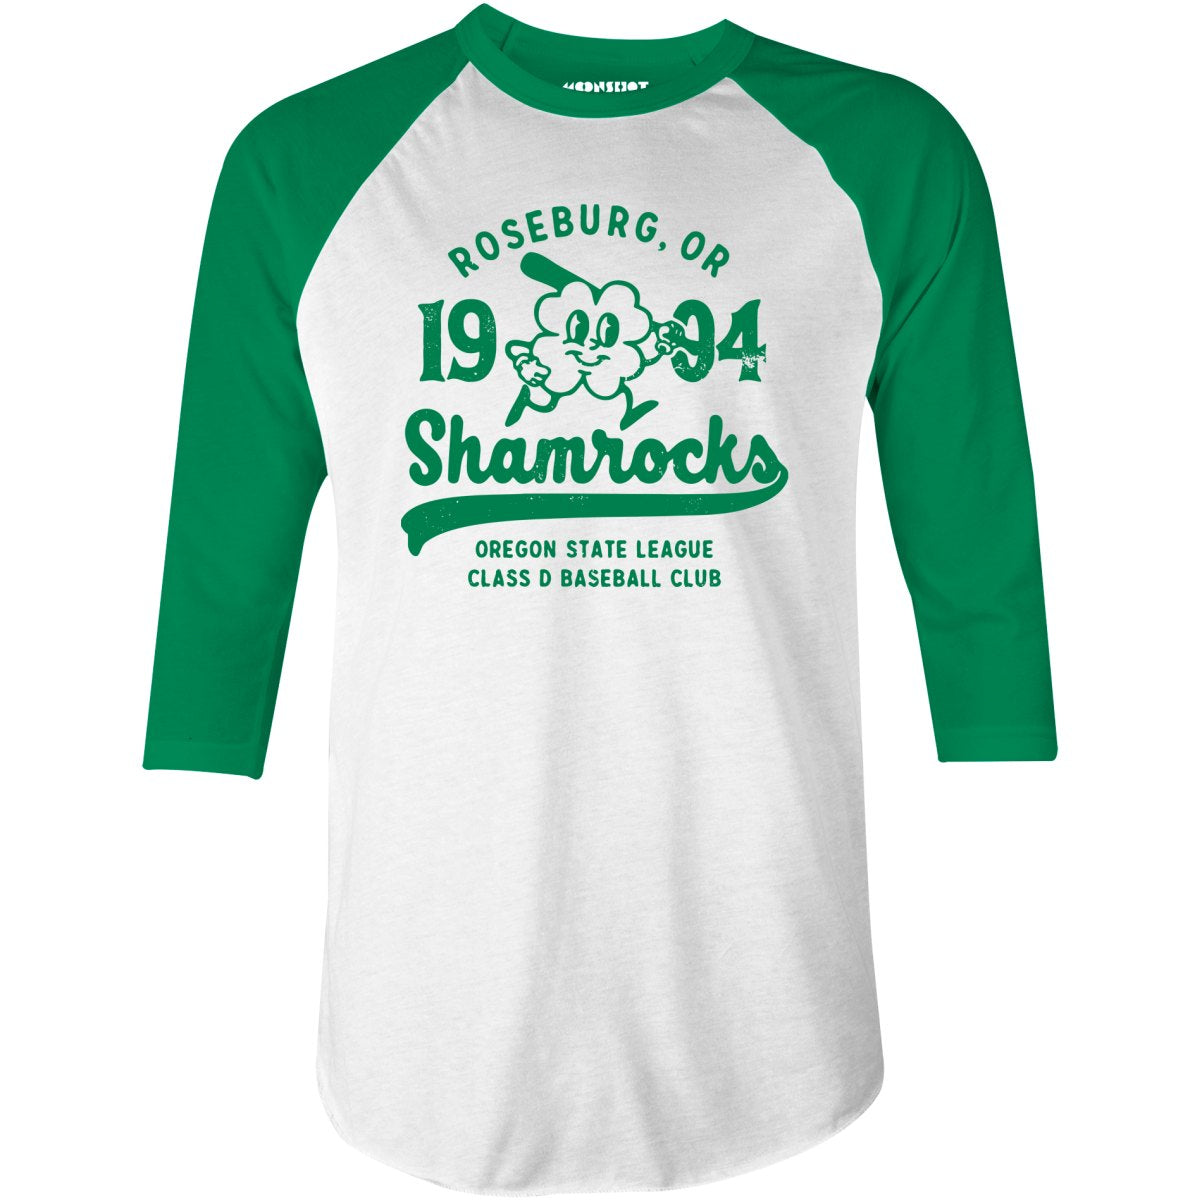 Roseburg Shamrocks - Oregon - Vintage Defunct Baseball Teams - 3/4 Sleeve Raglan T-Shirt